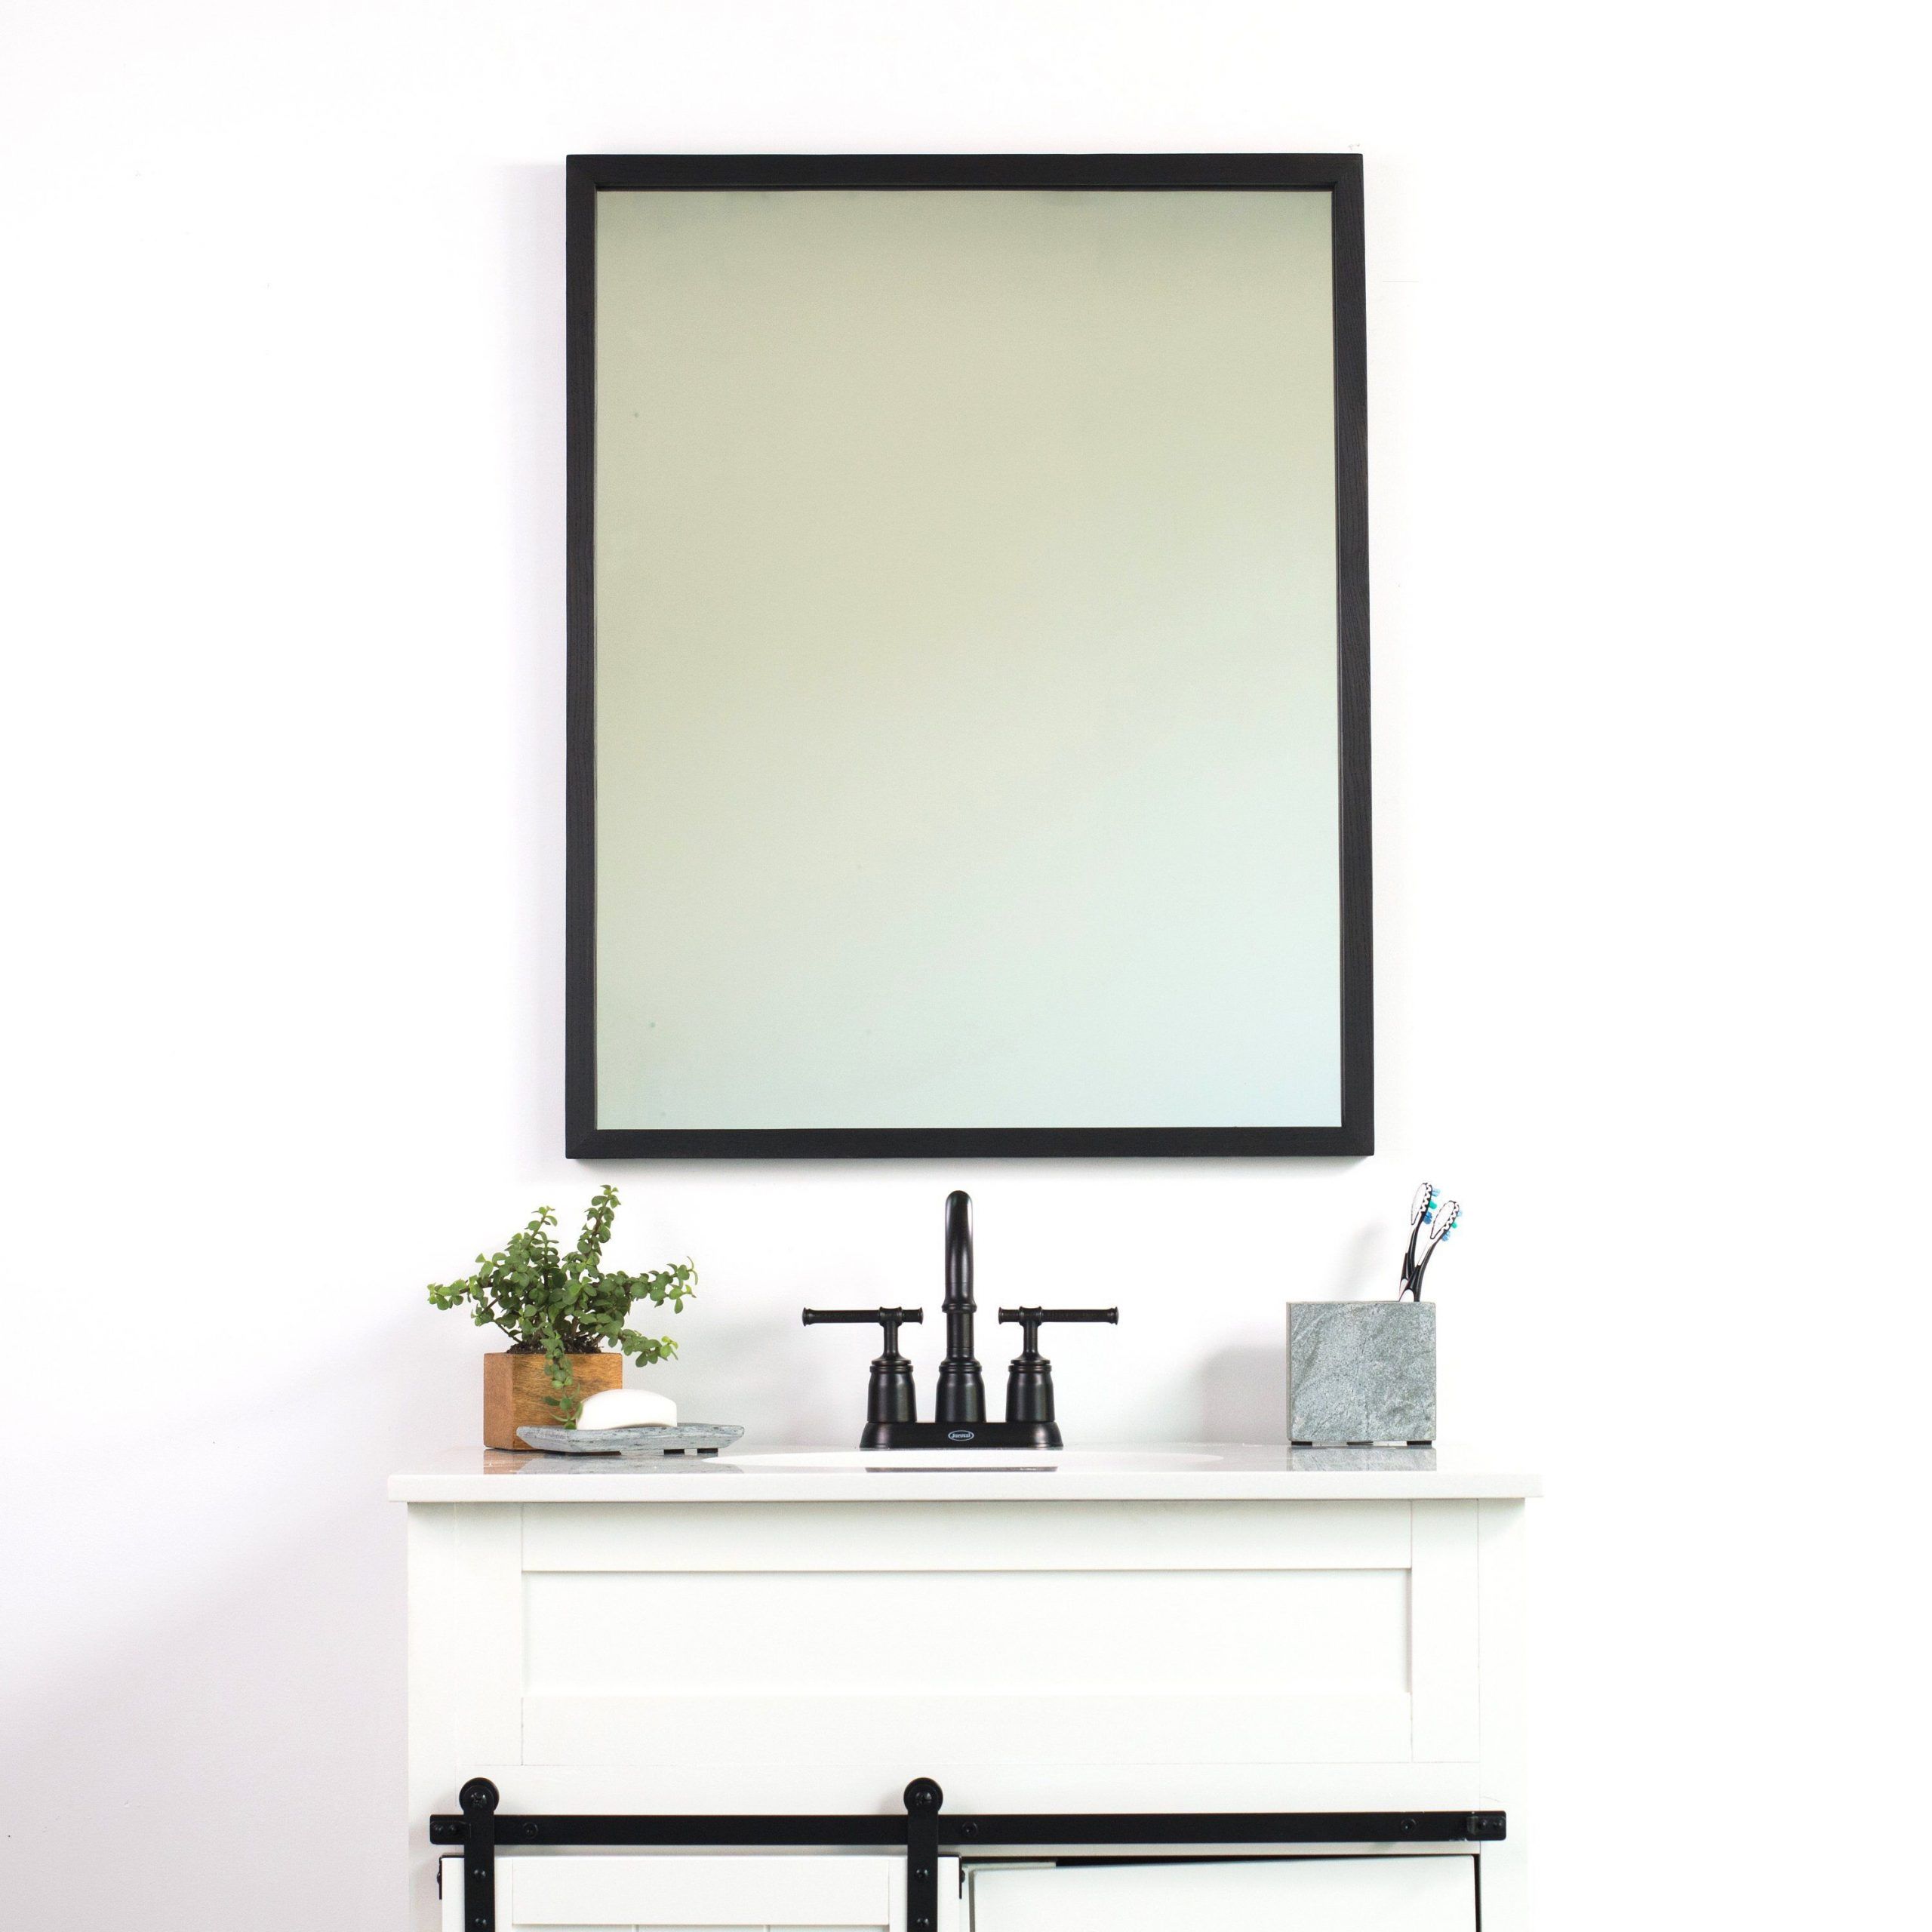 Black Bathroom Wall Mirror Thin Wall Mirror Modern Rustic | Etsy In Black Wood Wall Mirrors (View 1 of 15)